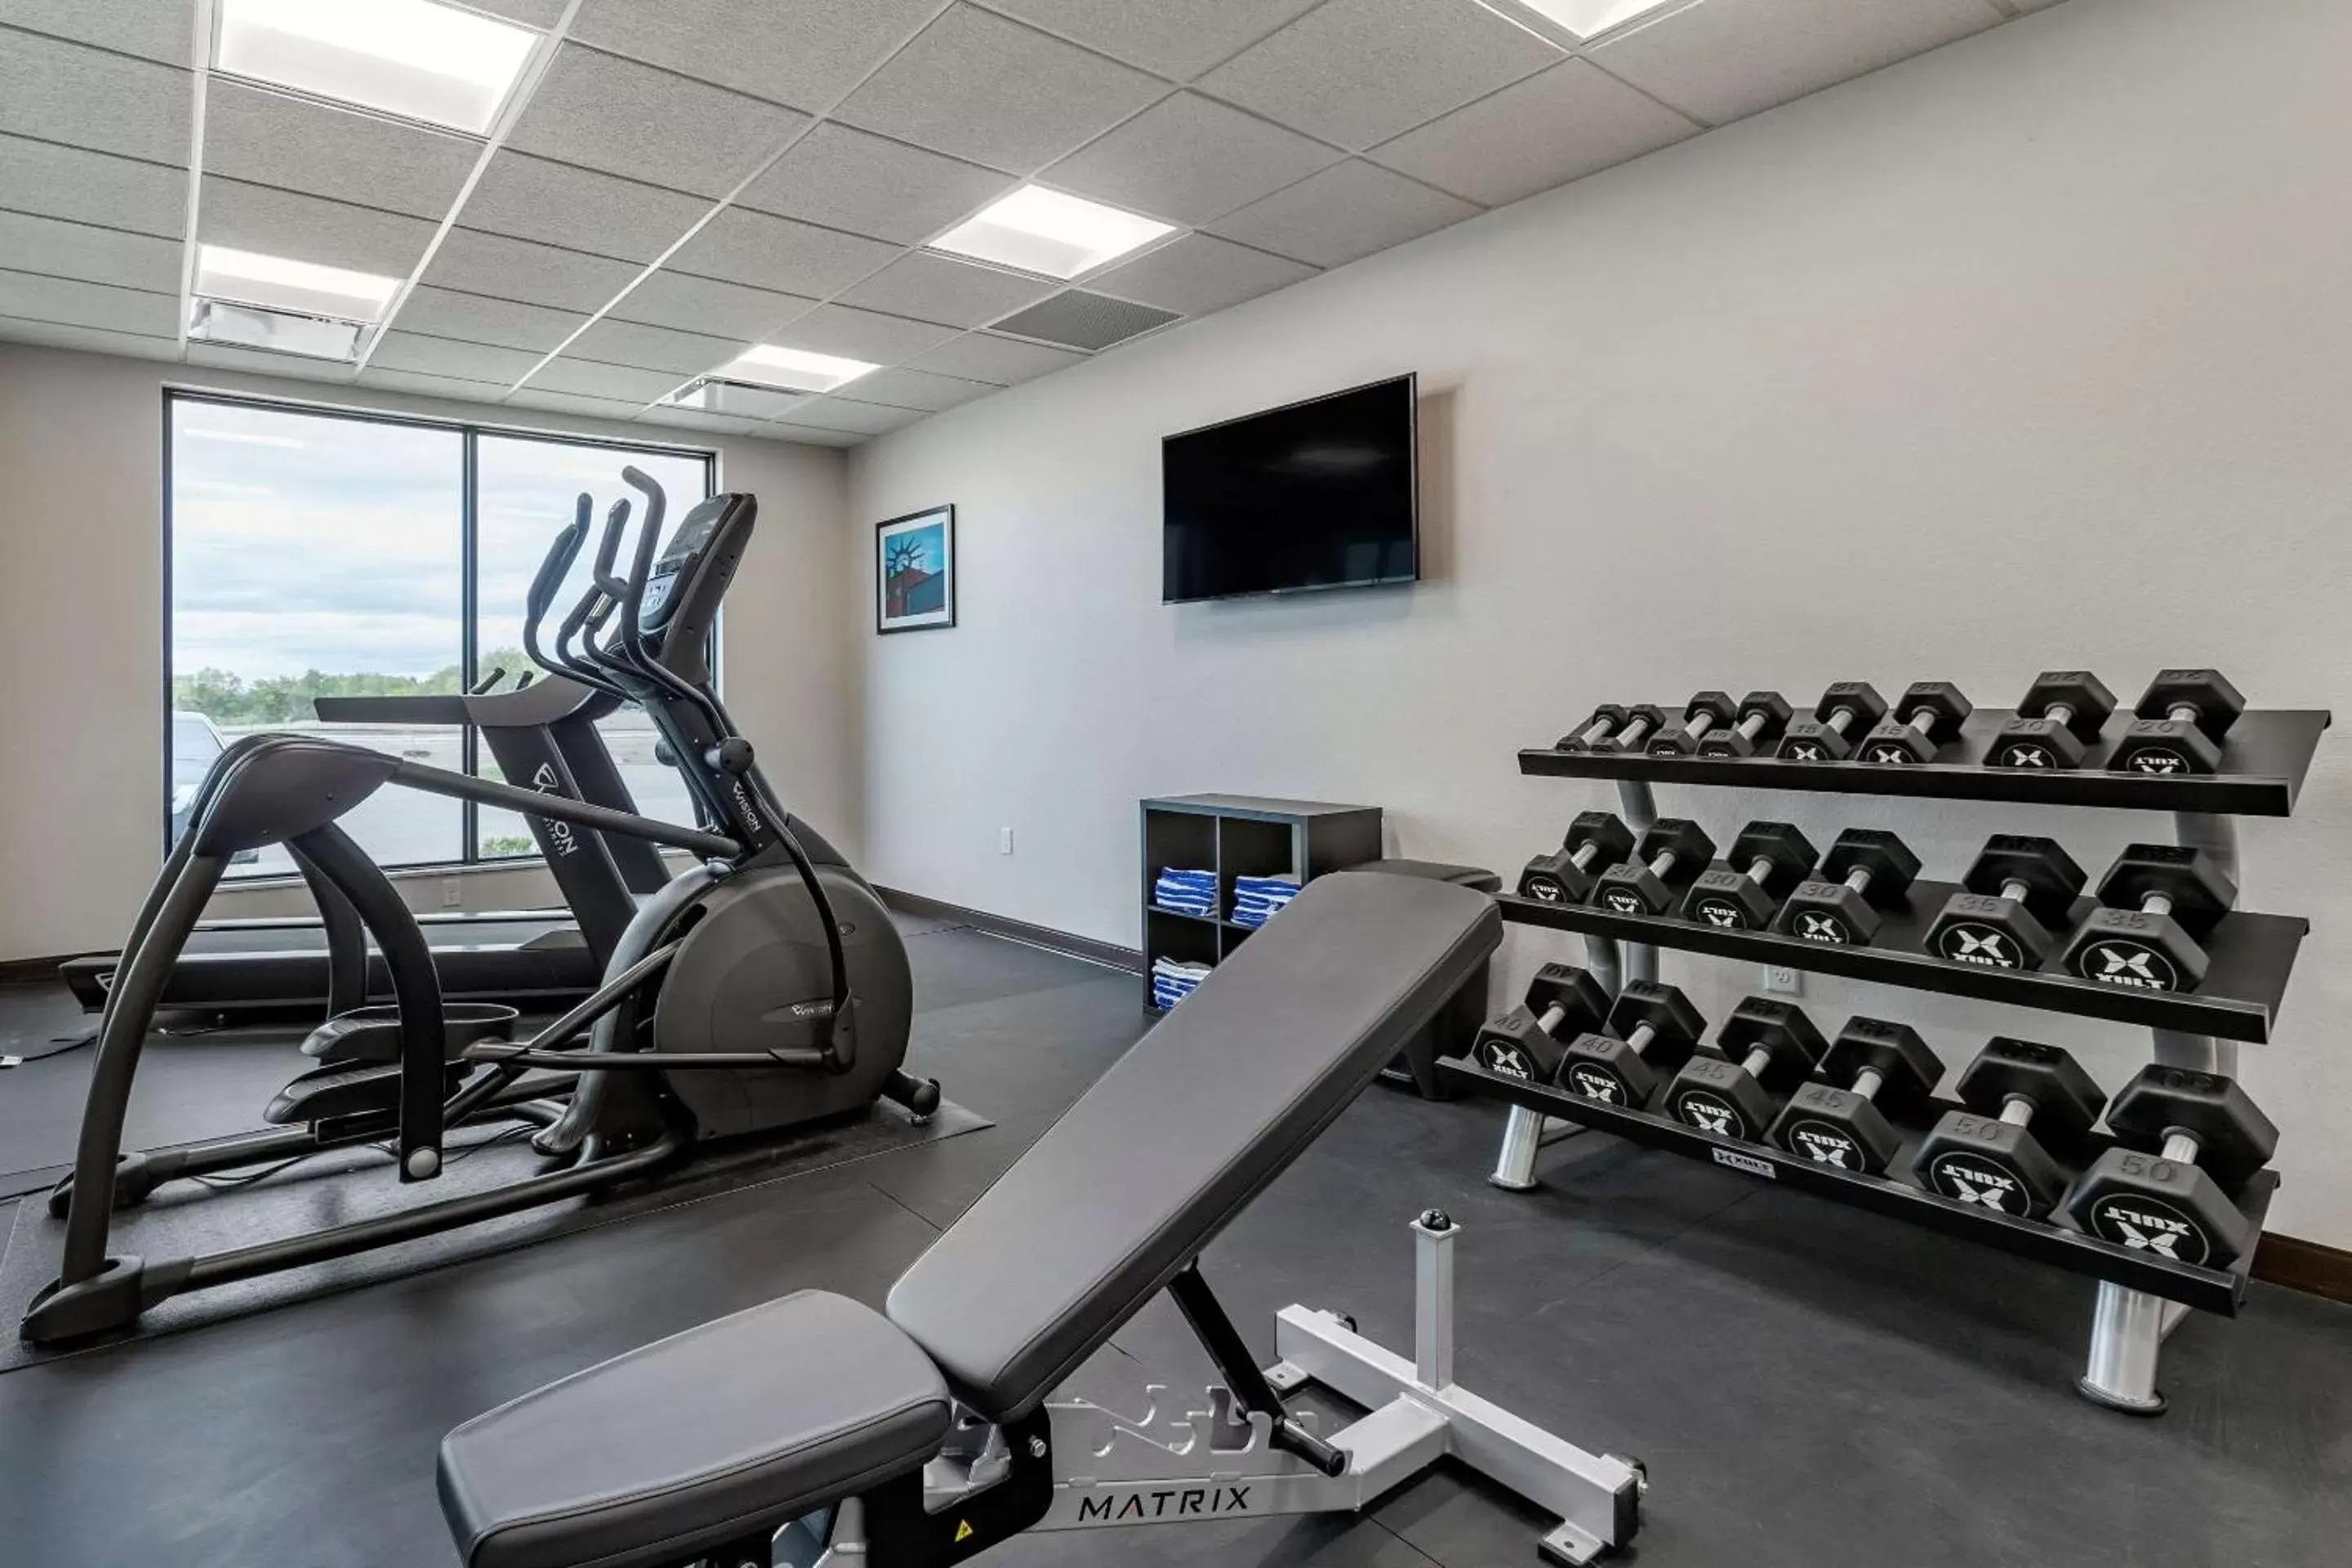 Fitness centre/facilities, Fitness Center/Facilities in Sleep Inn Waukee-West Des Moines